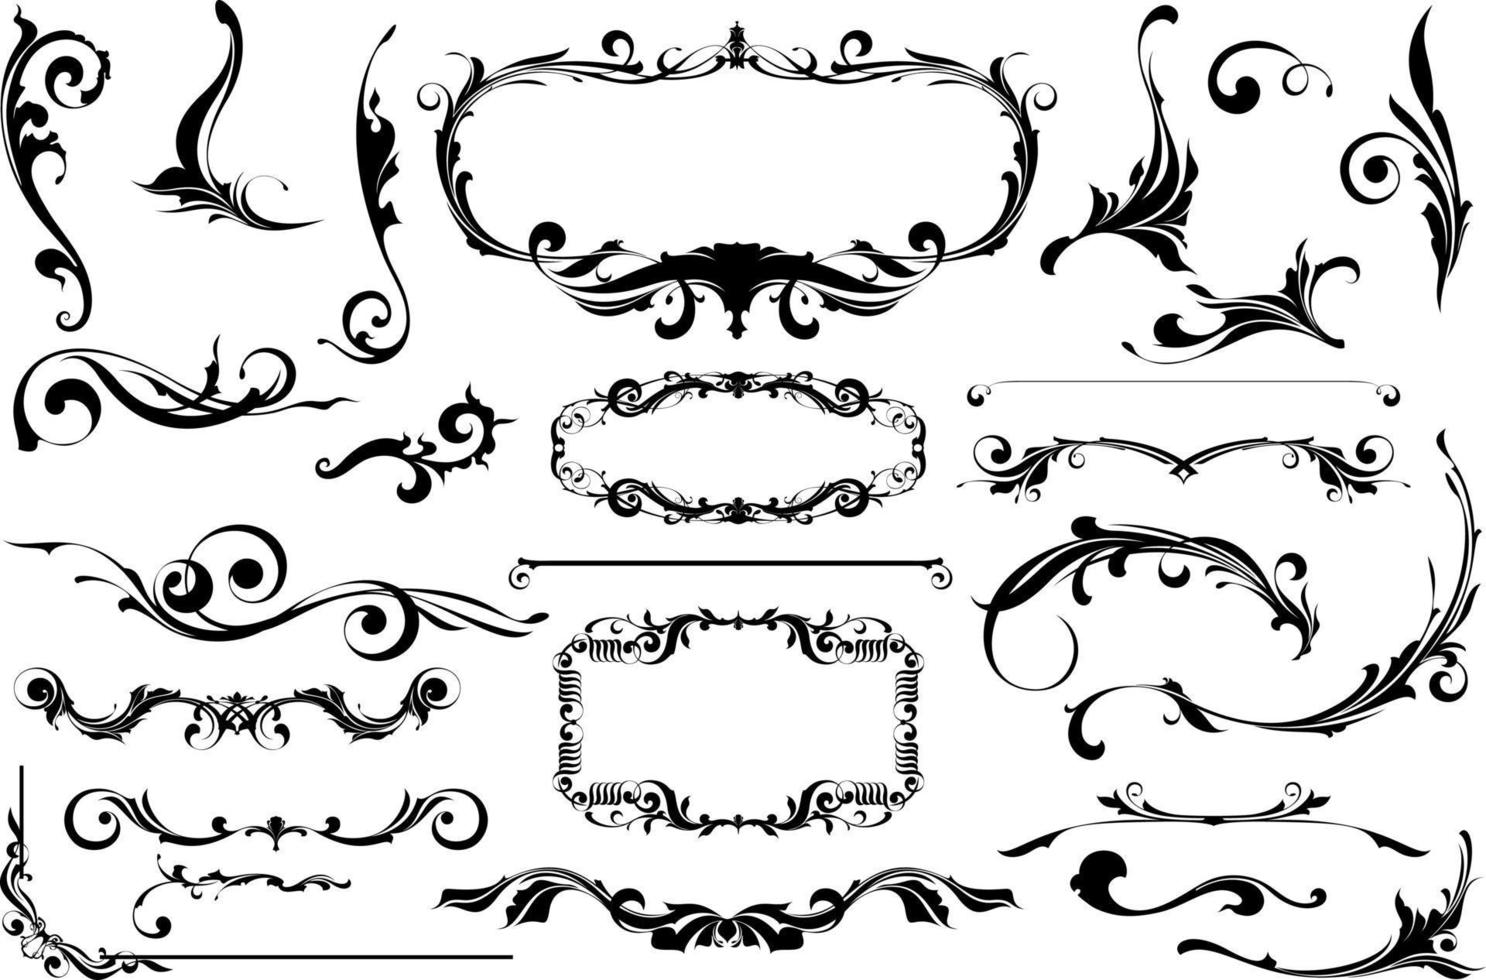 Damask detail.Graphic elements for design vector